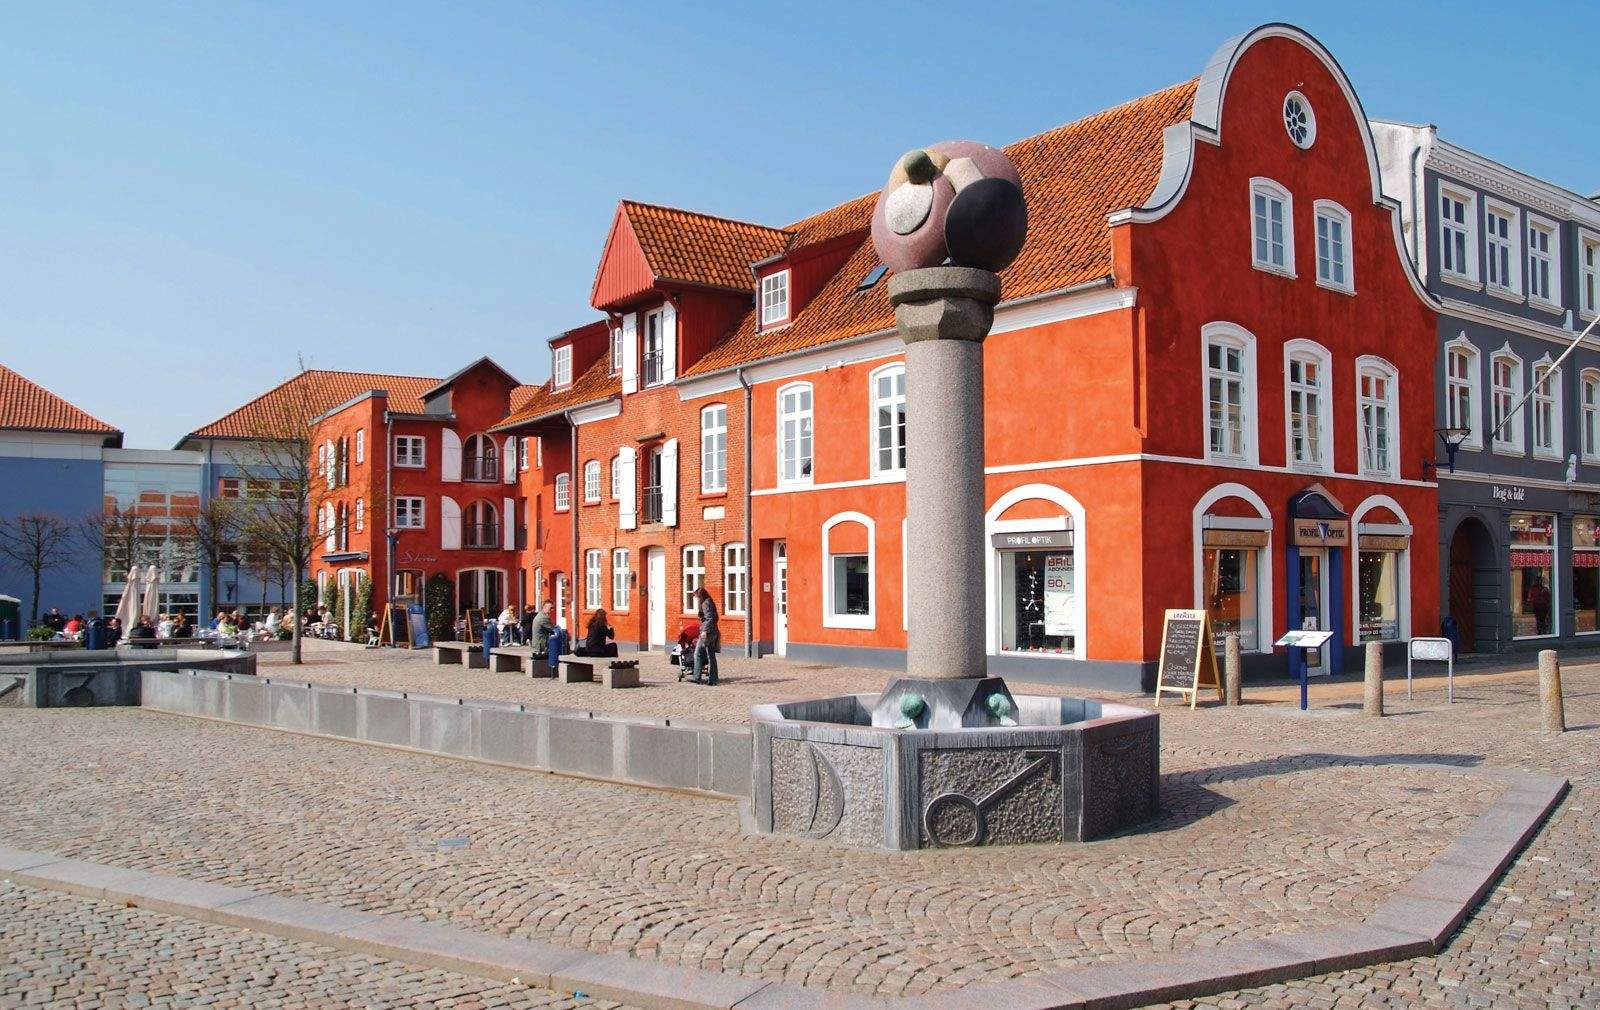 Åbenrå, Denmark. City travel guide – Attractions, Activities, Local cuisine